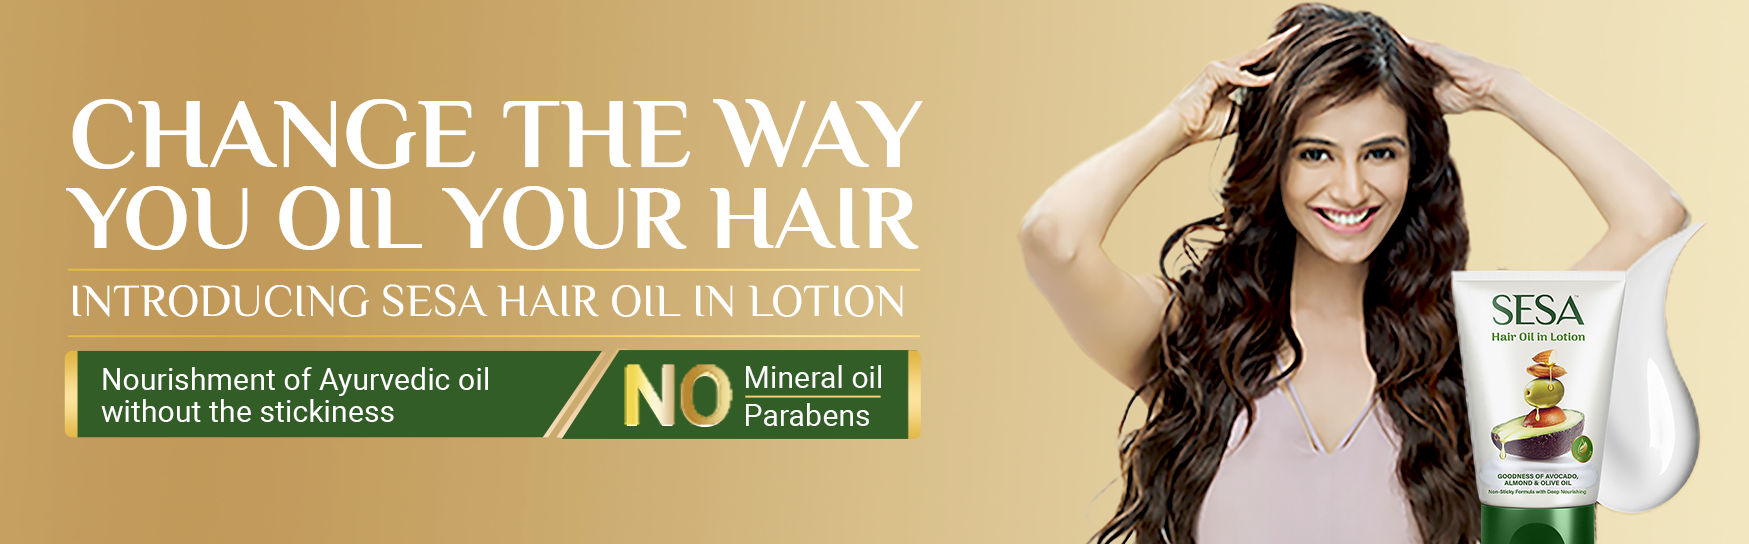 Sesa Hair Oil Packaging Size  200ml Color  Green  Behal International  Amritsar Punjab